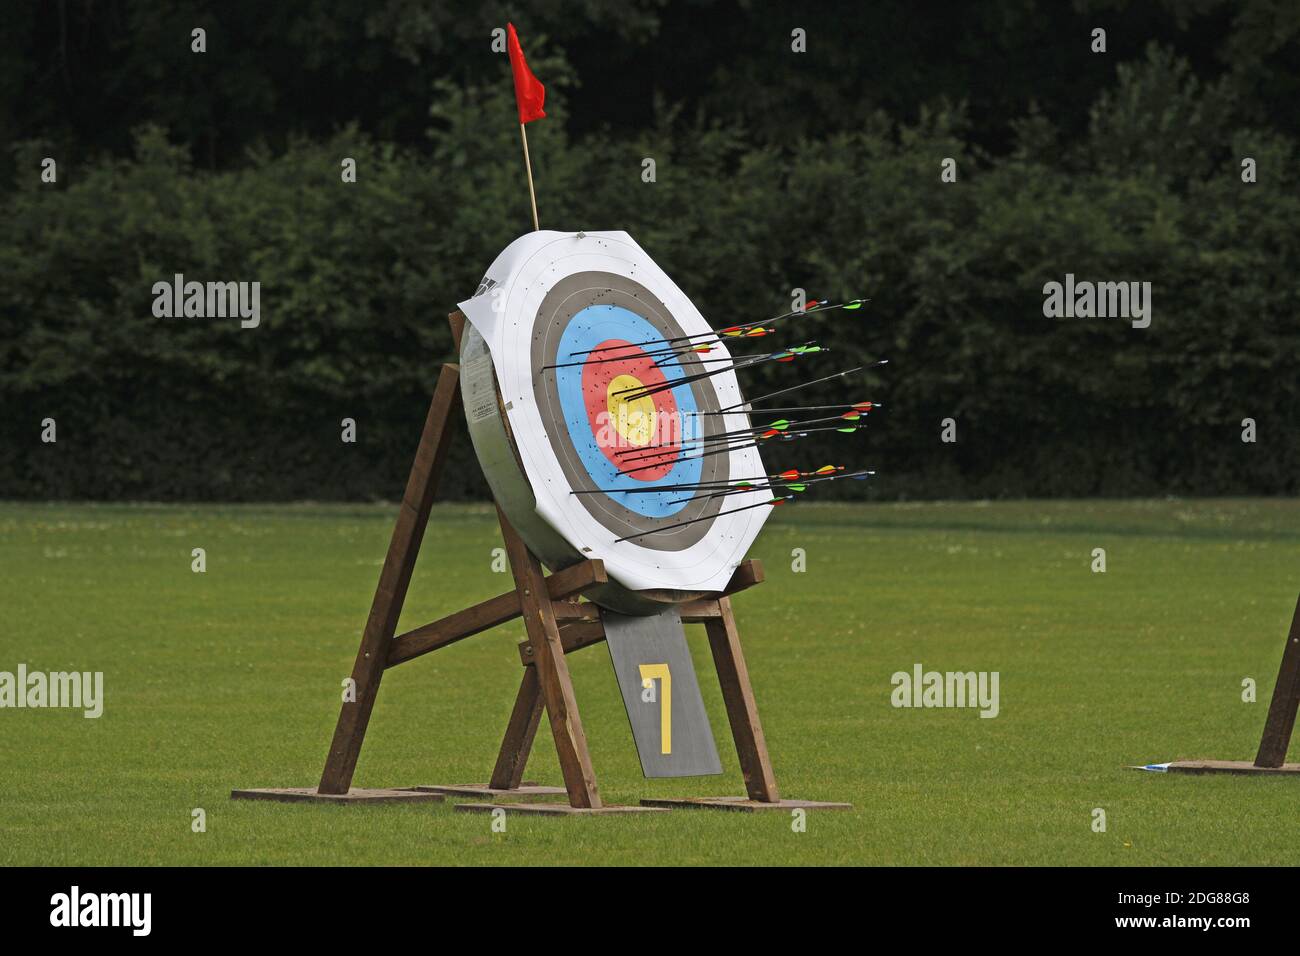 Target archery Stock Photo